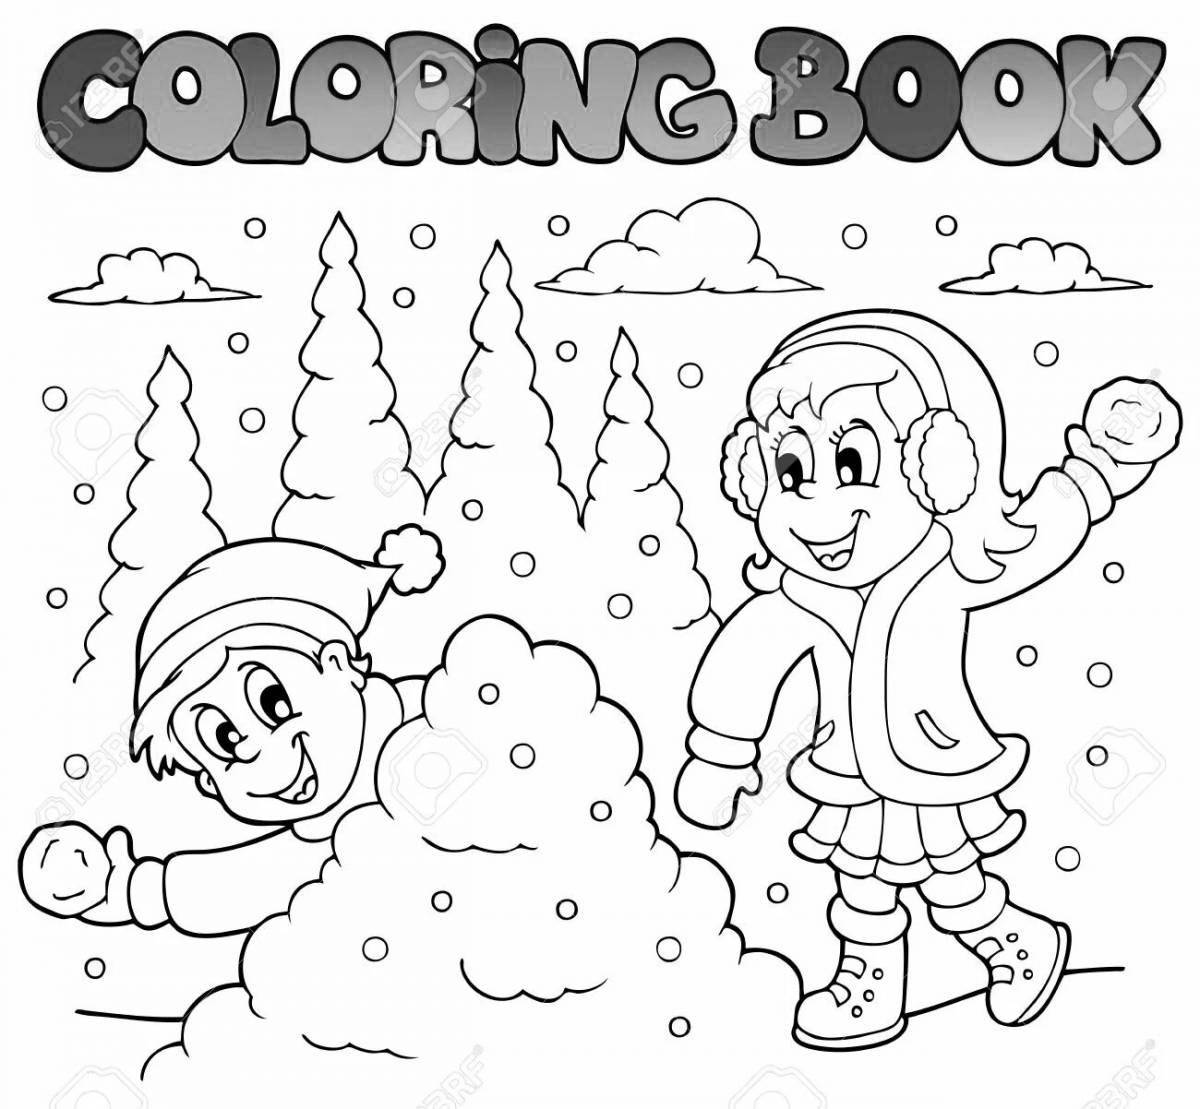 Coloring glowing snowballs